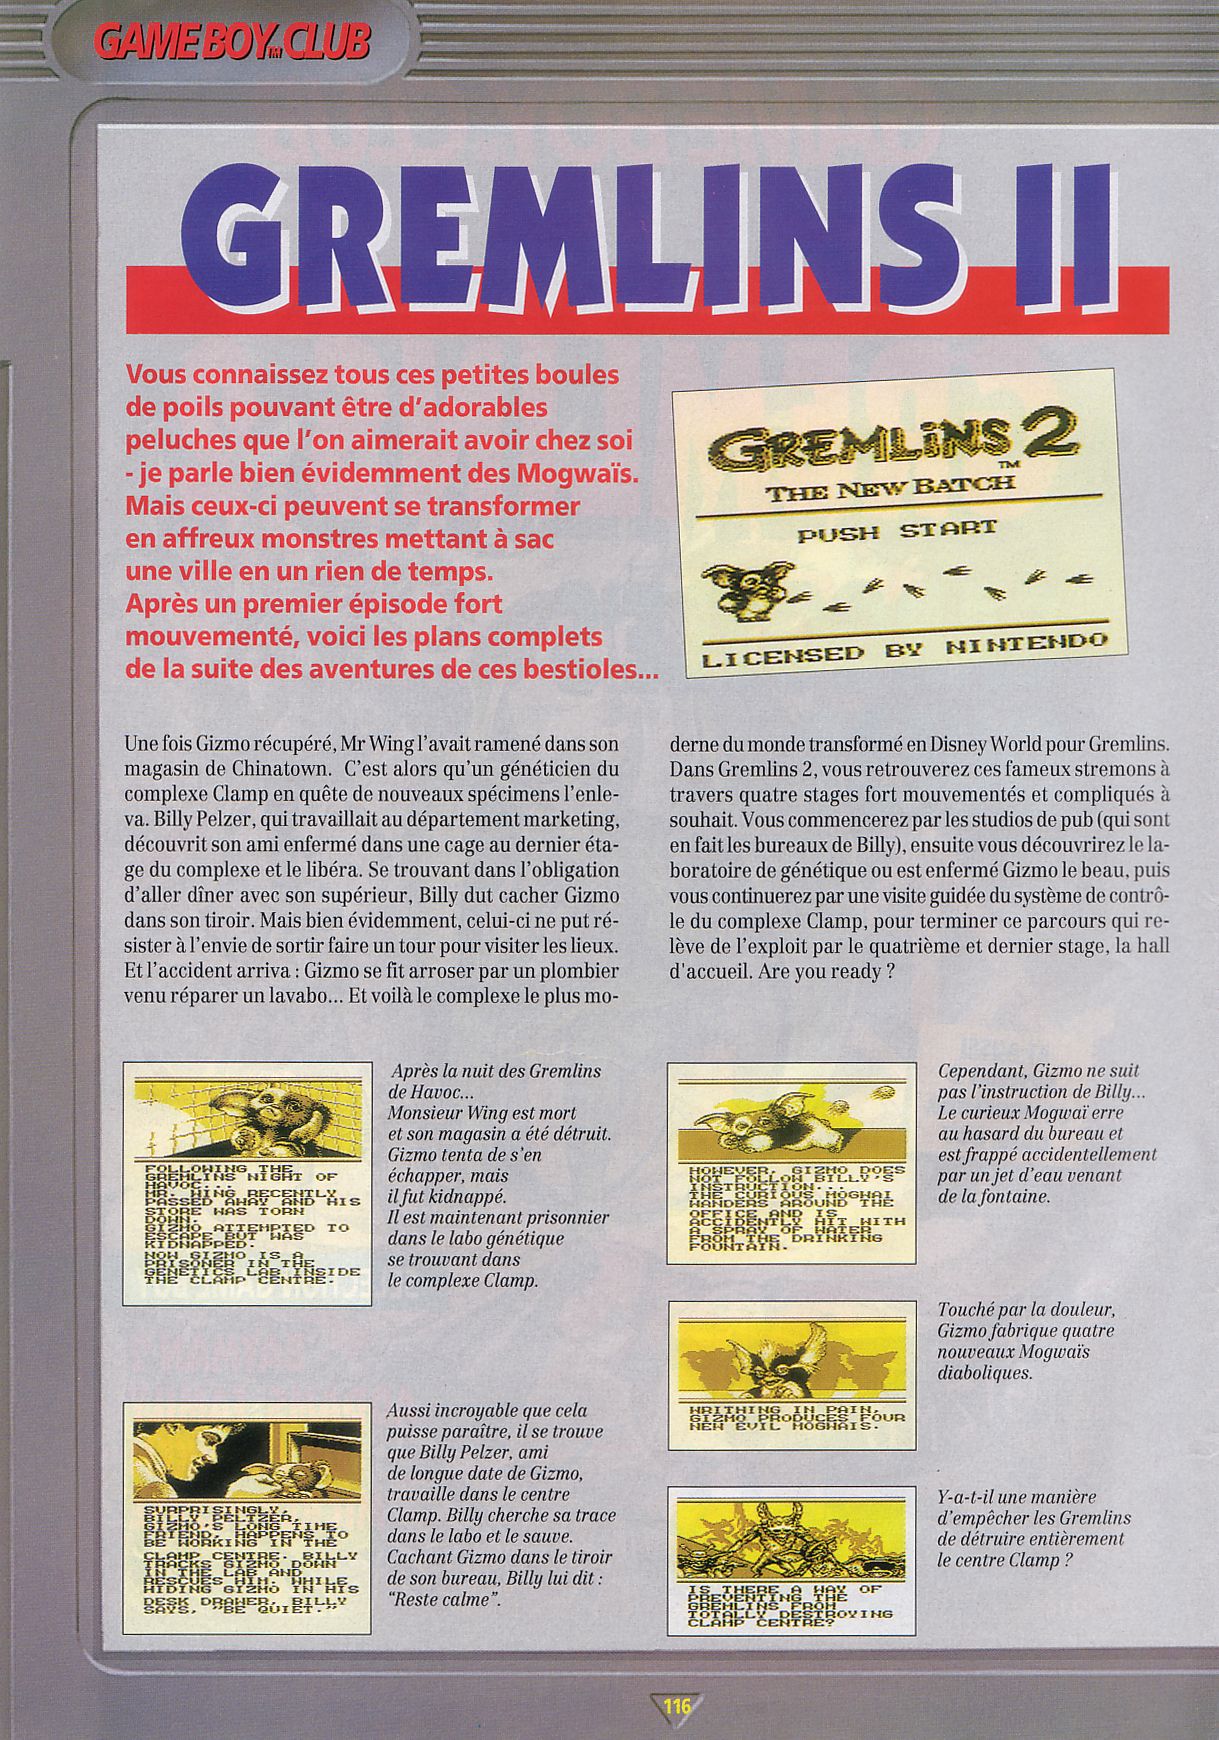 tests//813/Nintendo Player 007 - Page 116 (1992-11-12).jpg